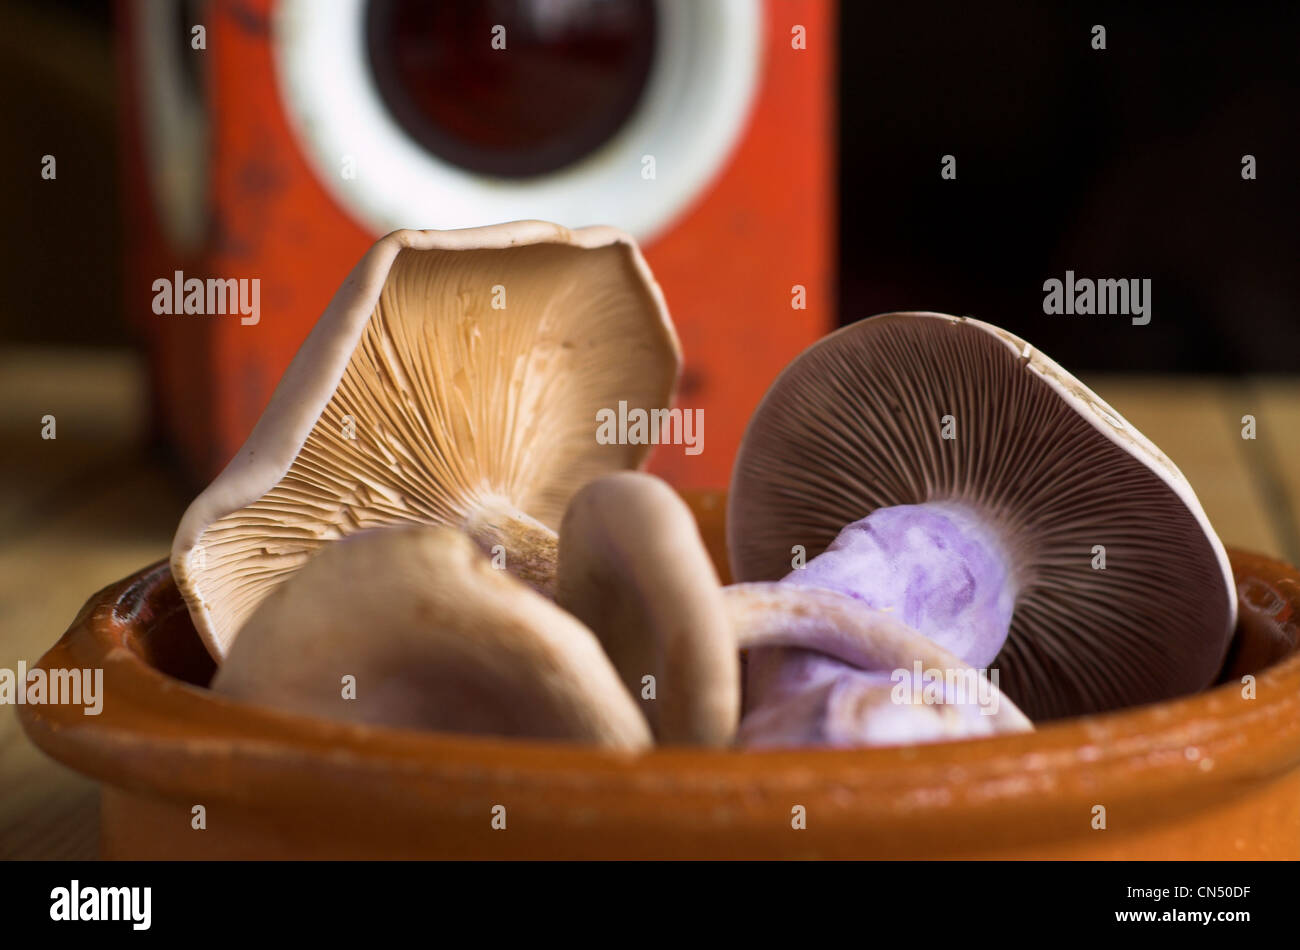 Raw field mushrooms in a bowl. Stock Photo